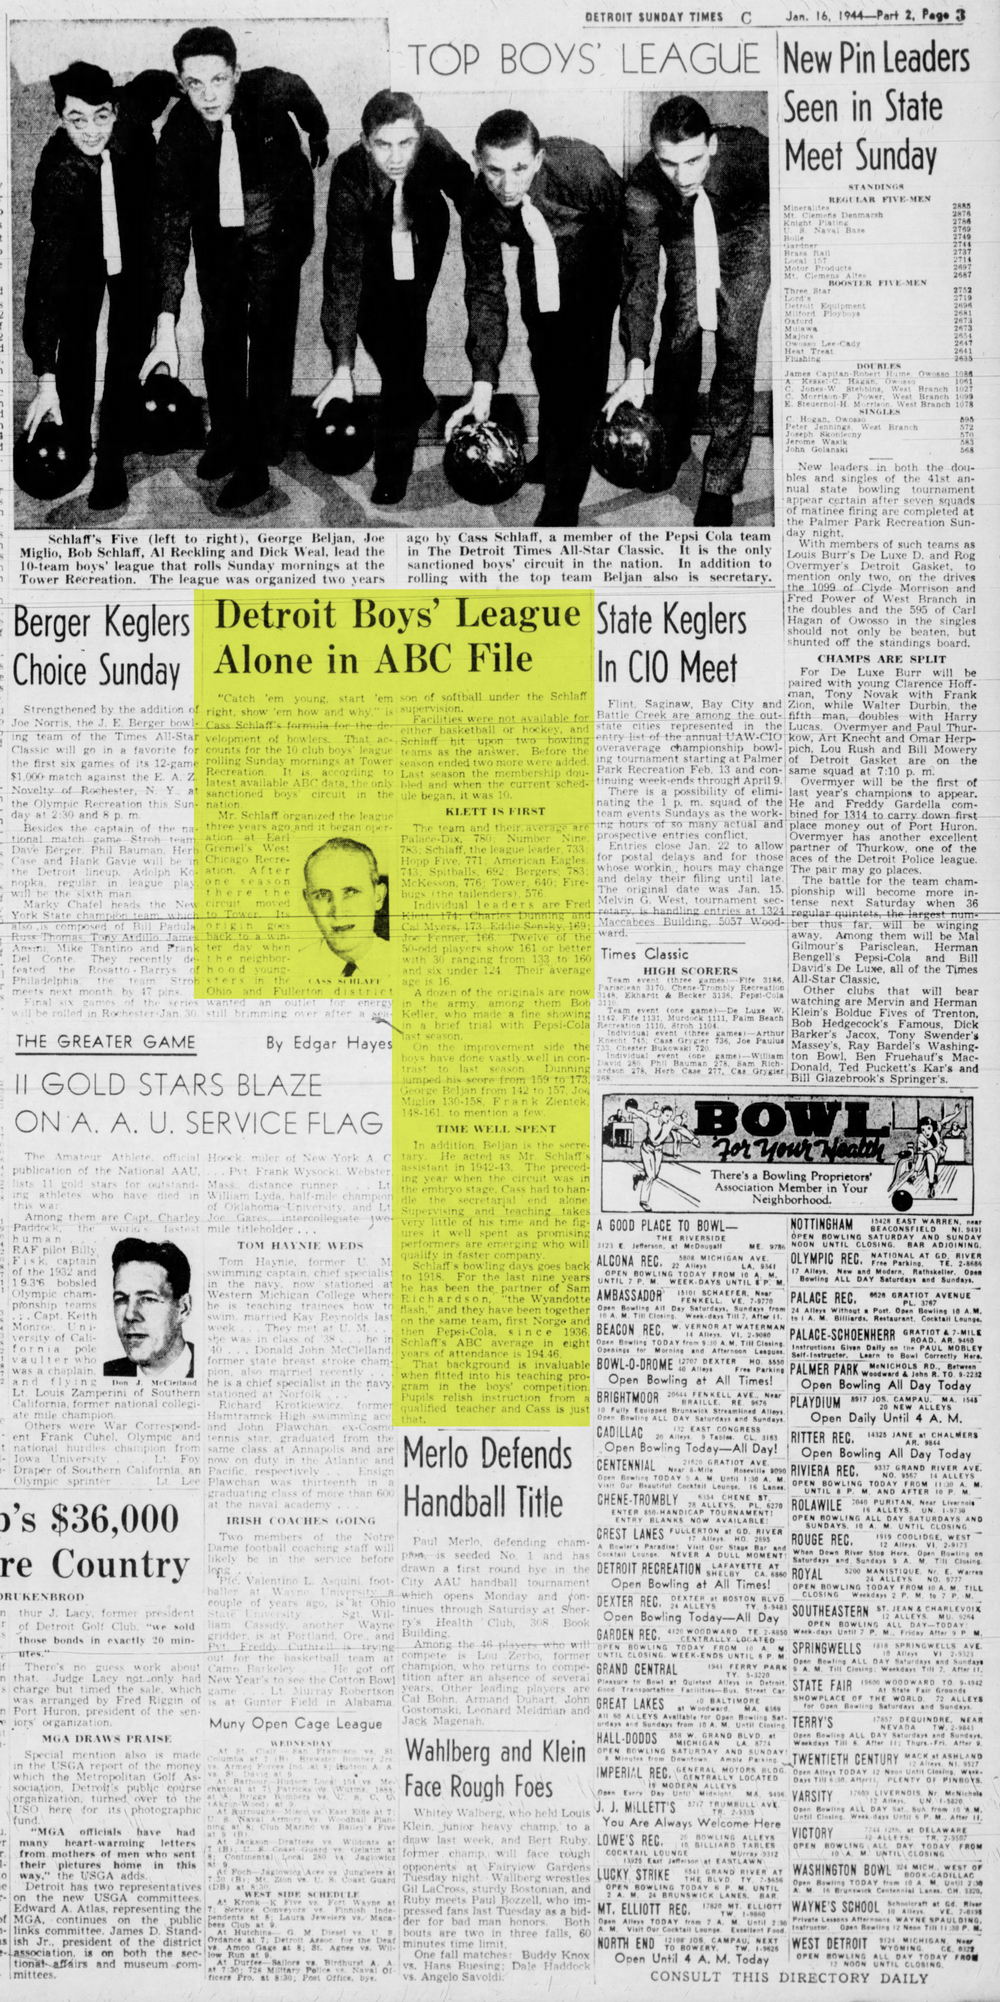 Tower Recreation - Detroit Evening Times Sun Jan 1944 Boys League